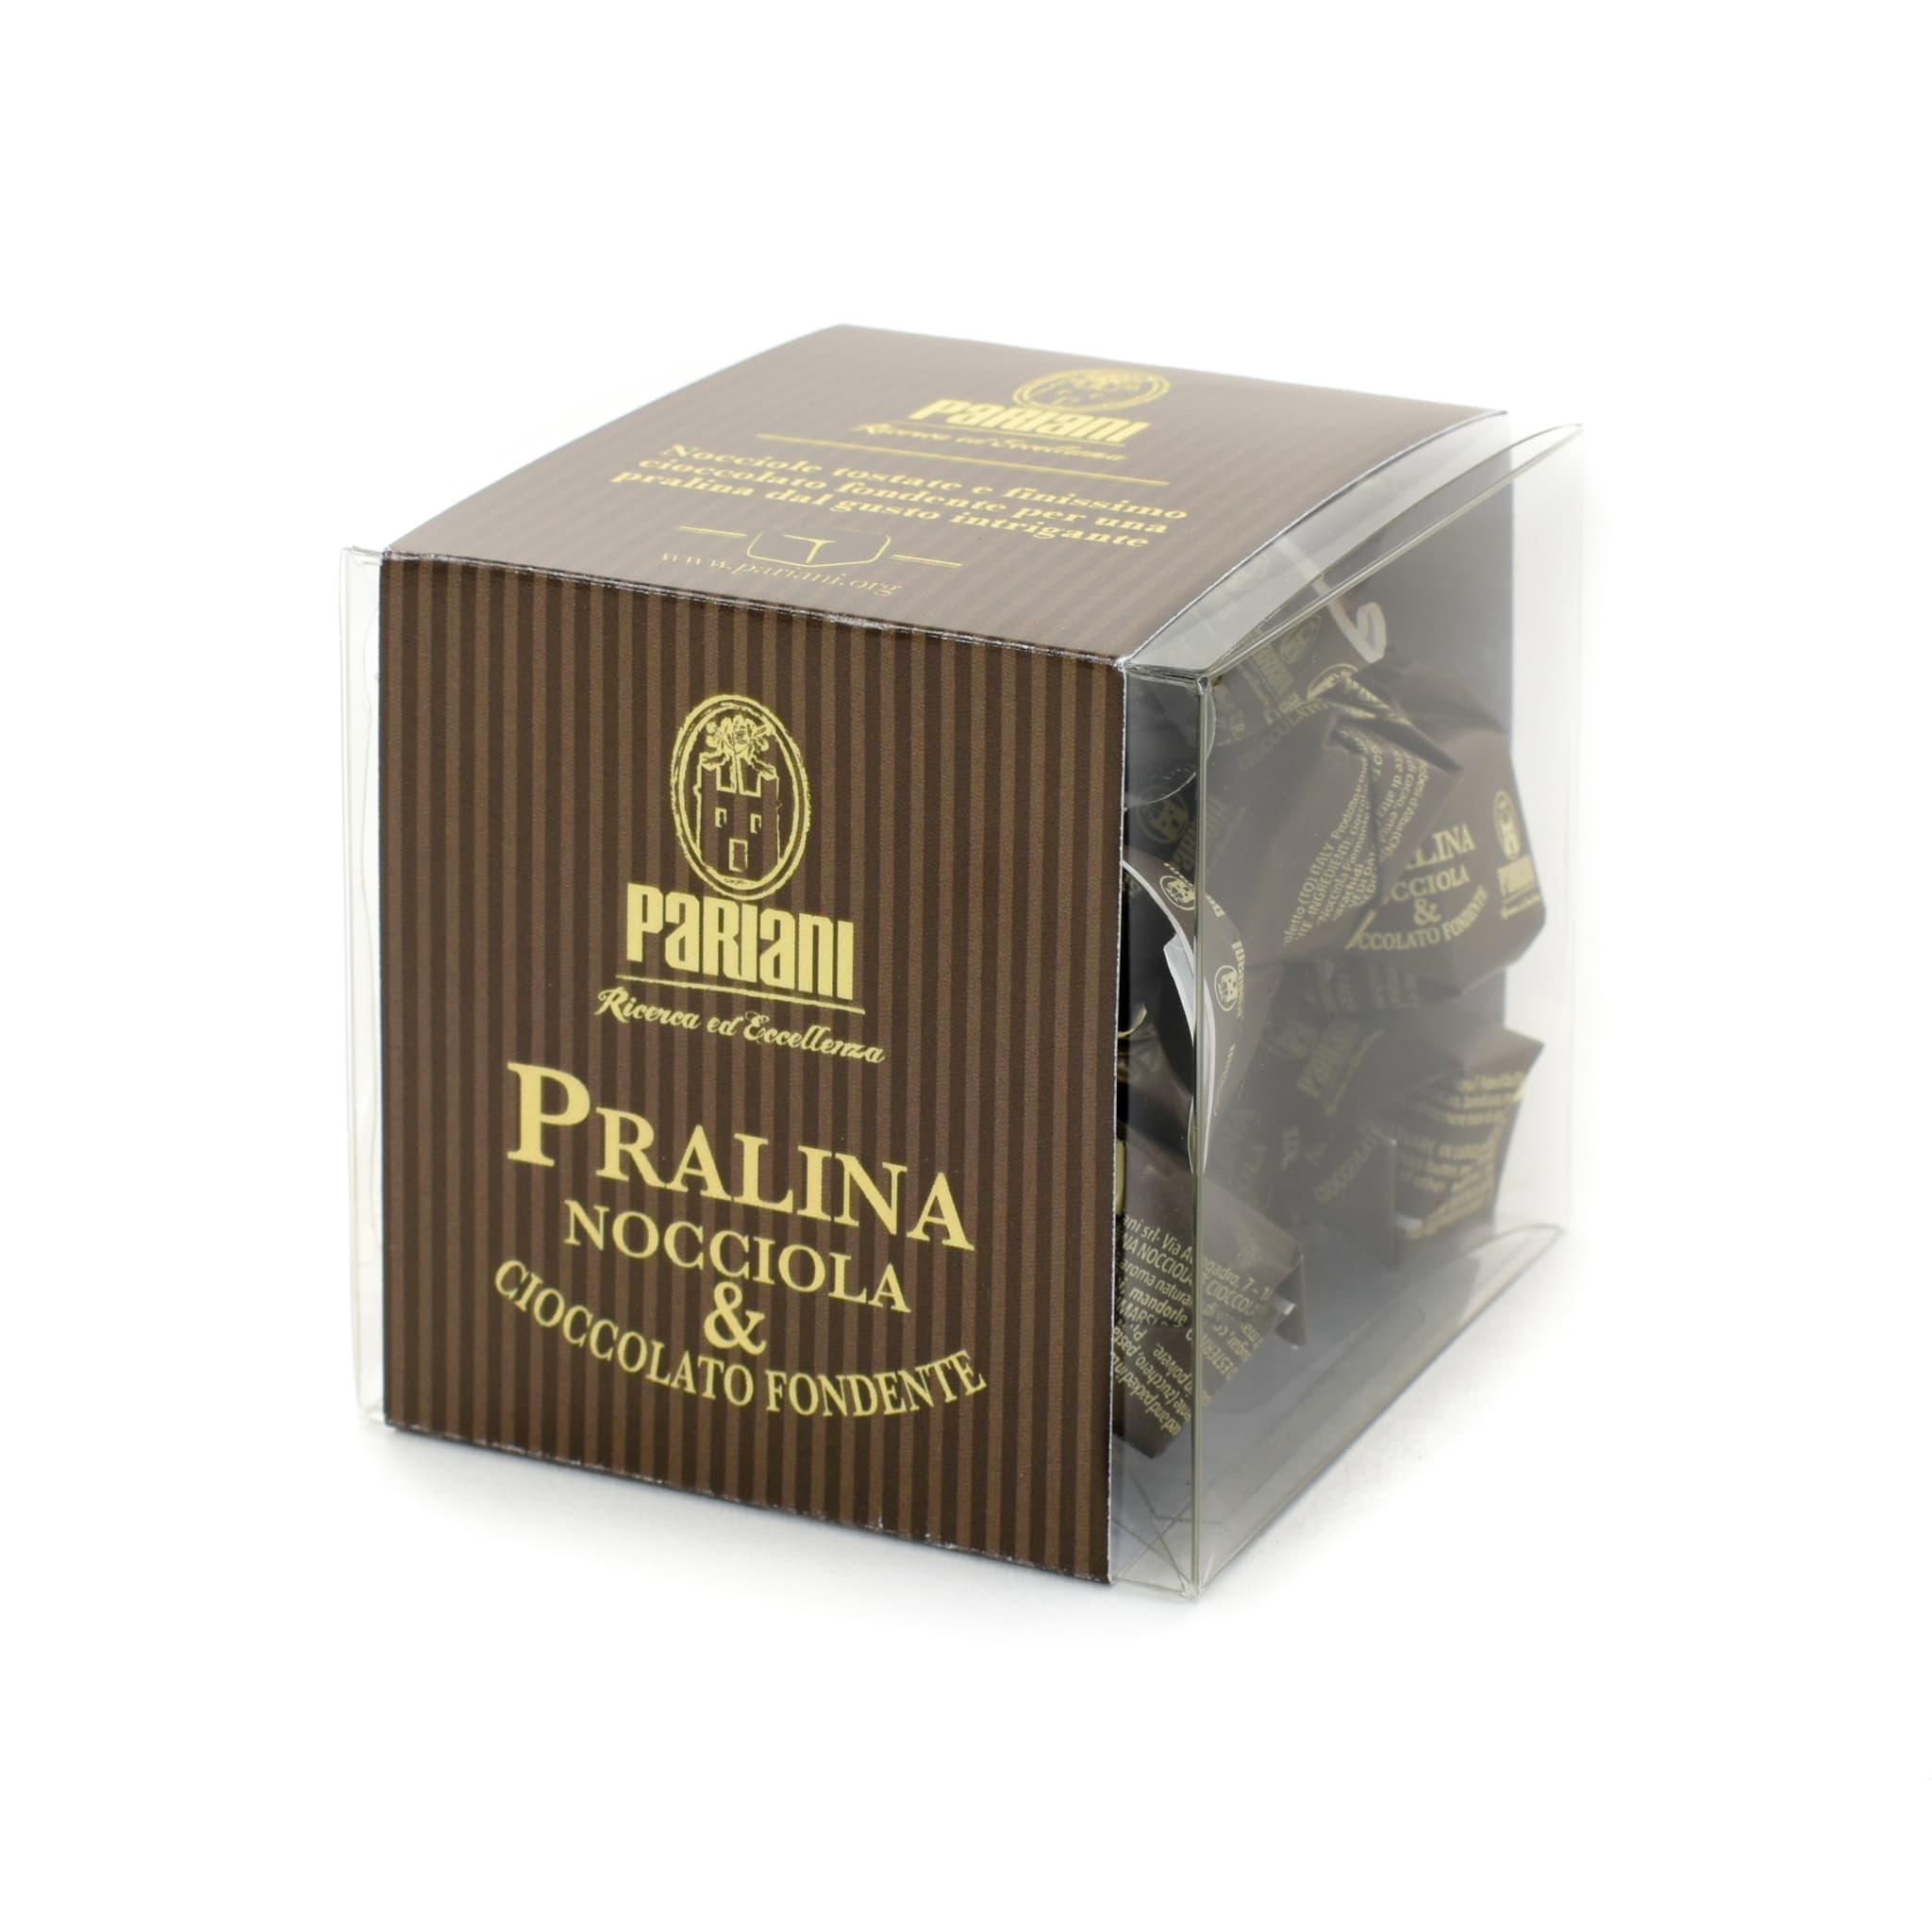 Pariani Hazelnut and Dark Chocolate Pralines